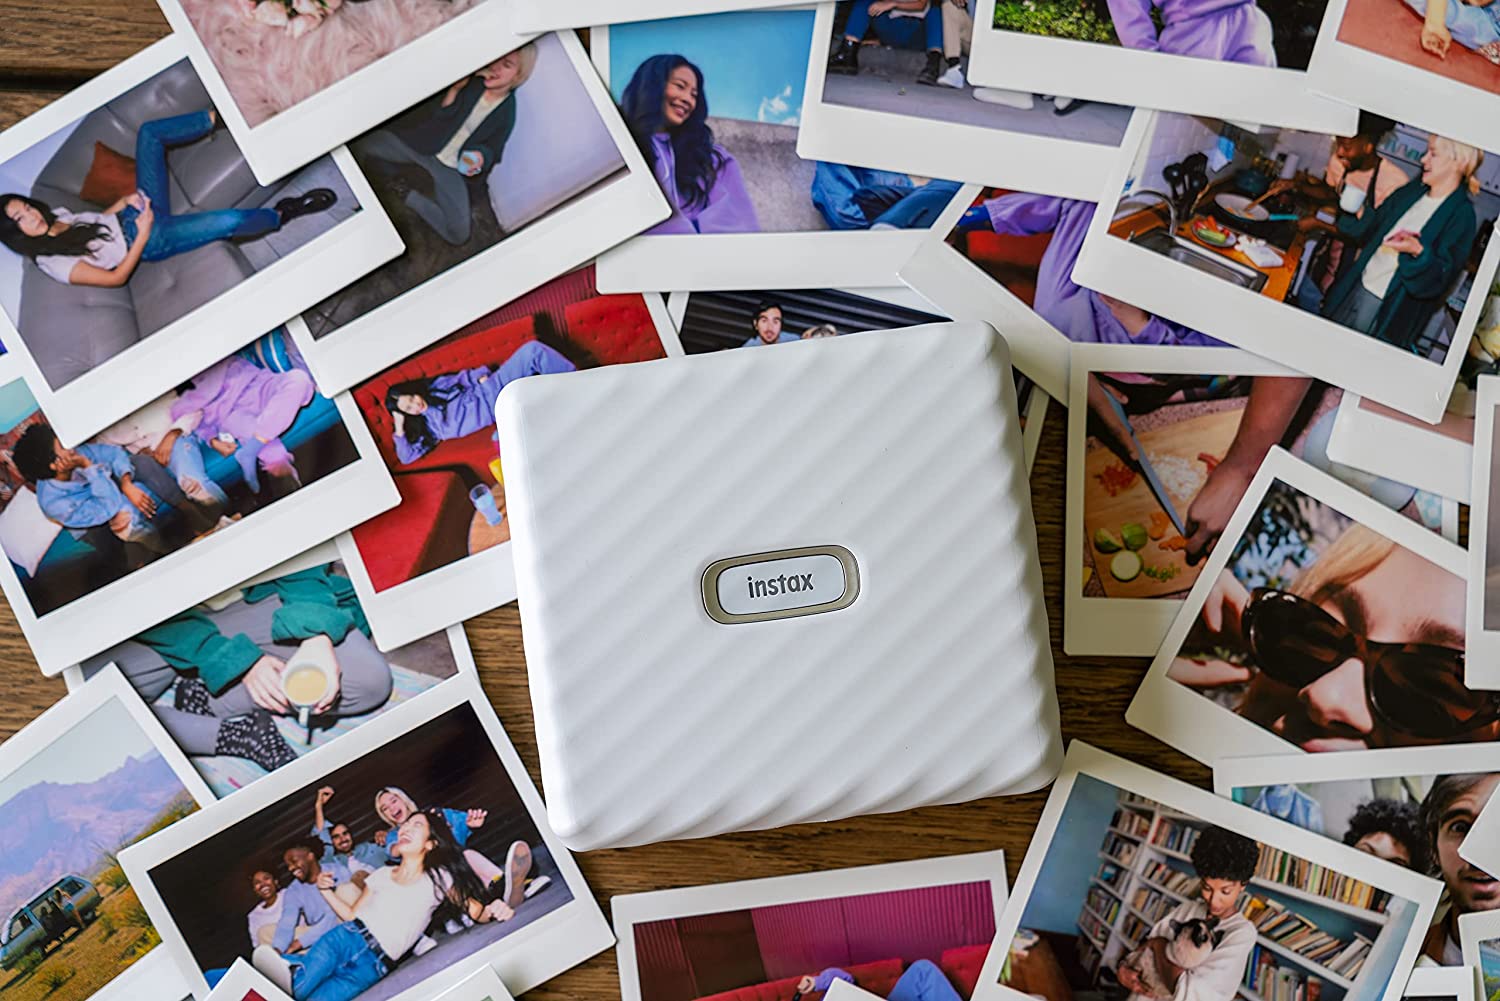 Fujifilm Instax Link Wide Smartphone Printer Bundle with 30-Films + Bag -